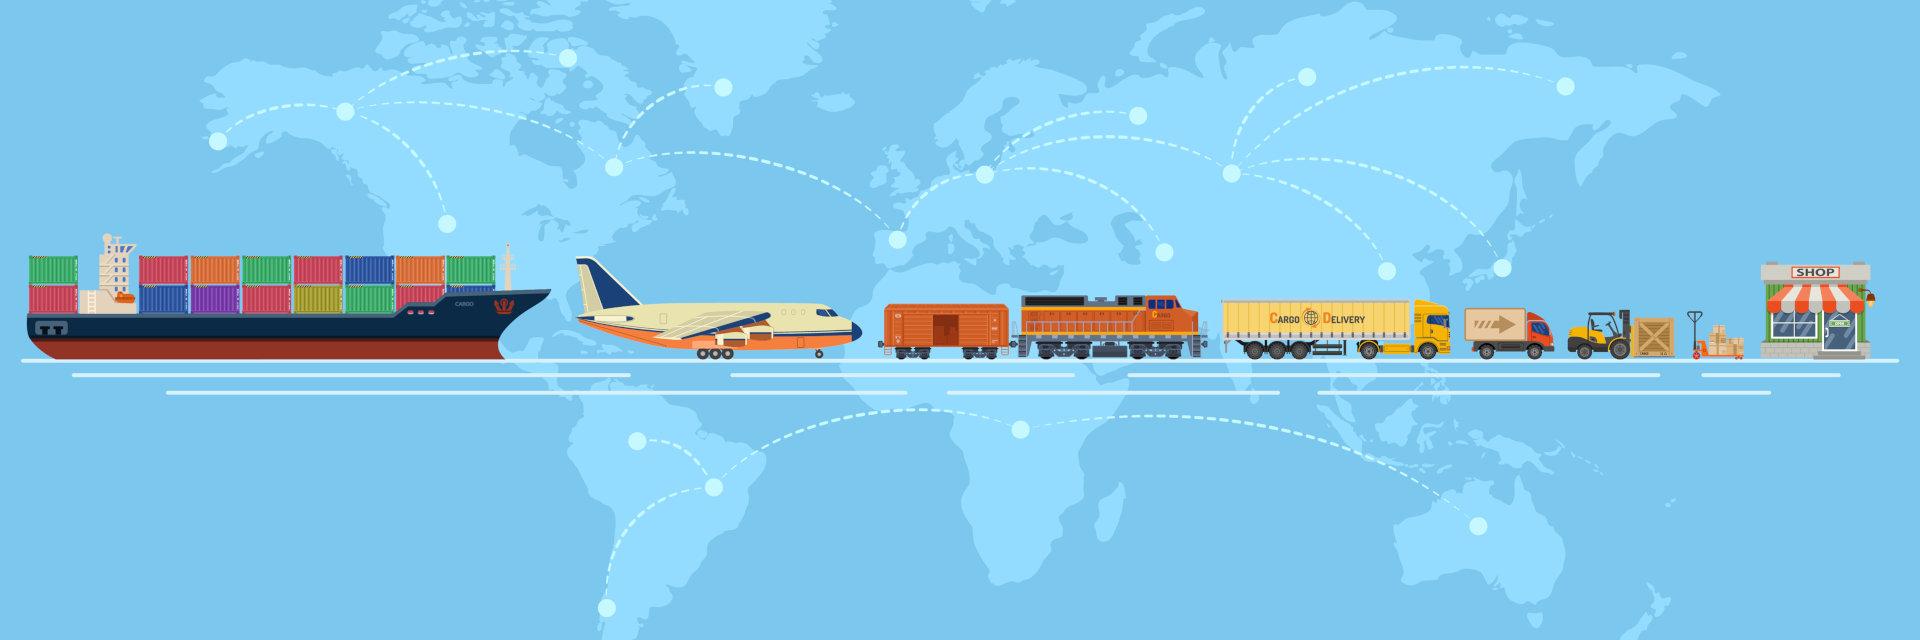 Product Services – Logistics image